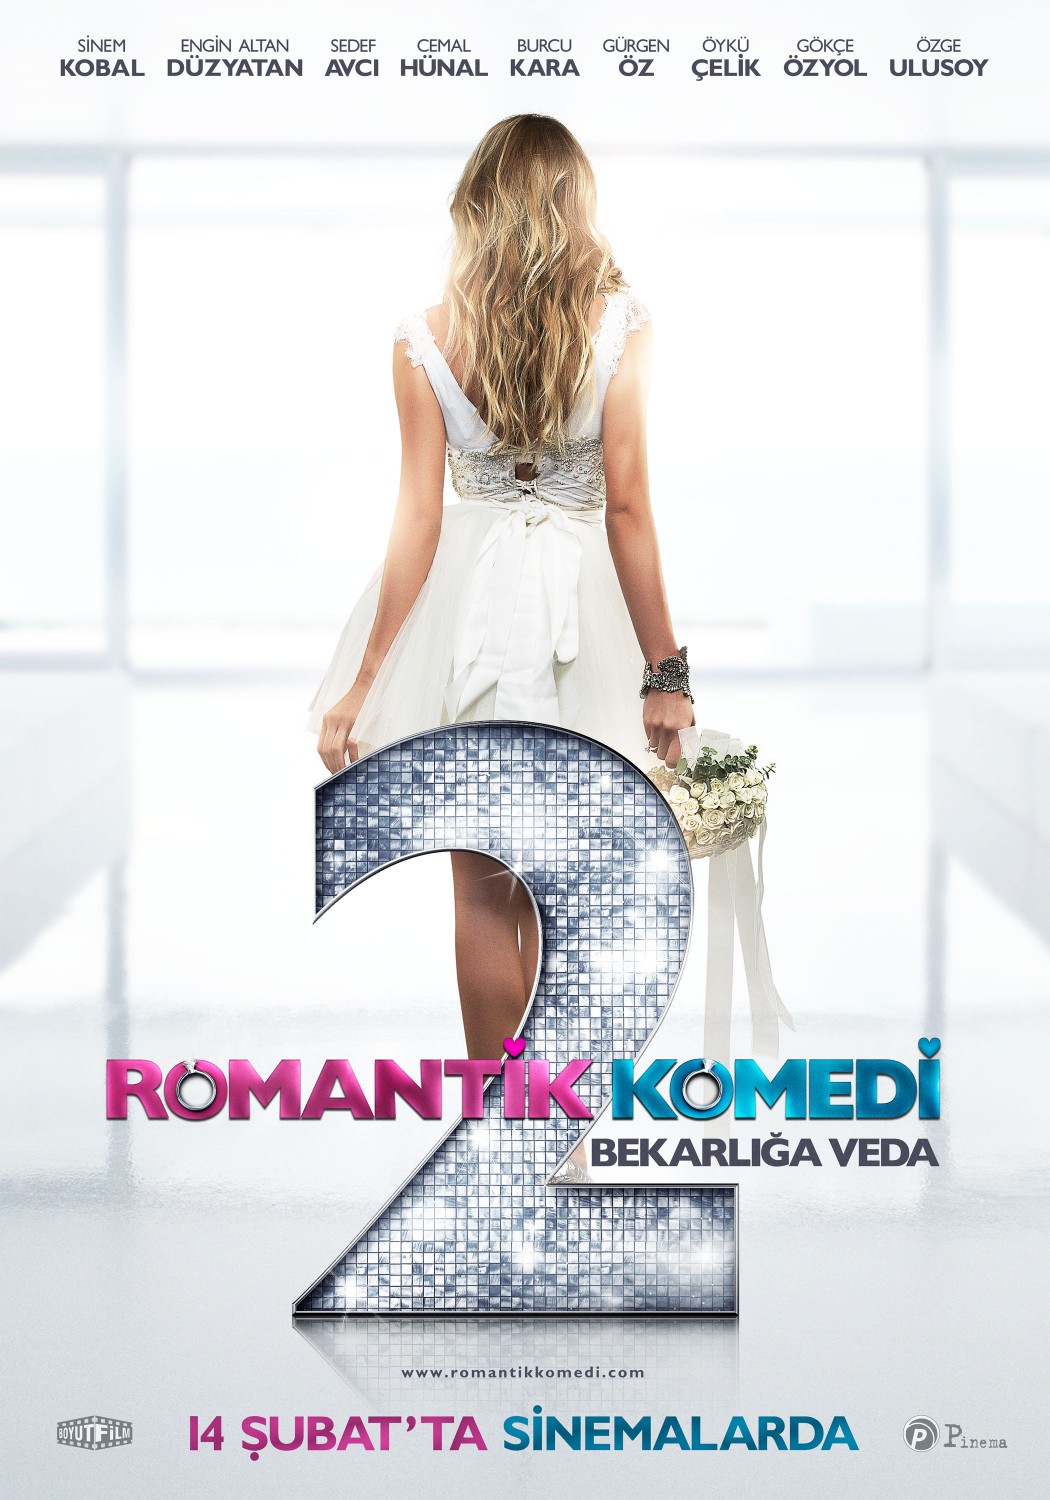 Extra Large Movie Poster Image for Romantik komedi 2: Bekarliga veda (#3 of 9)